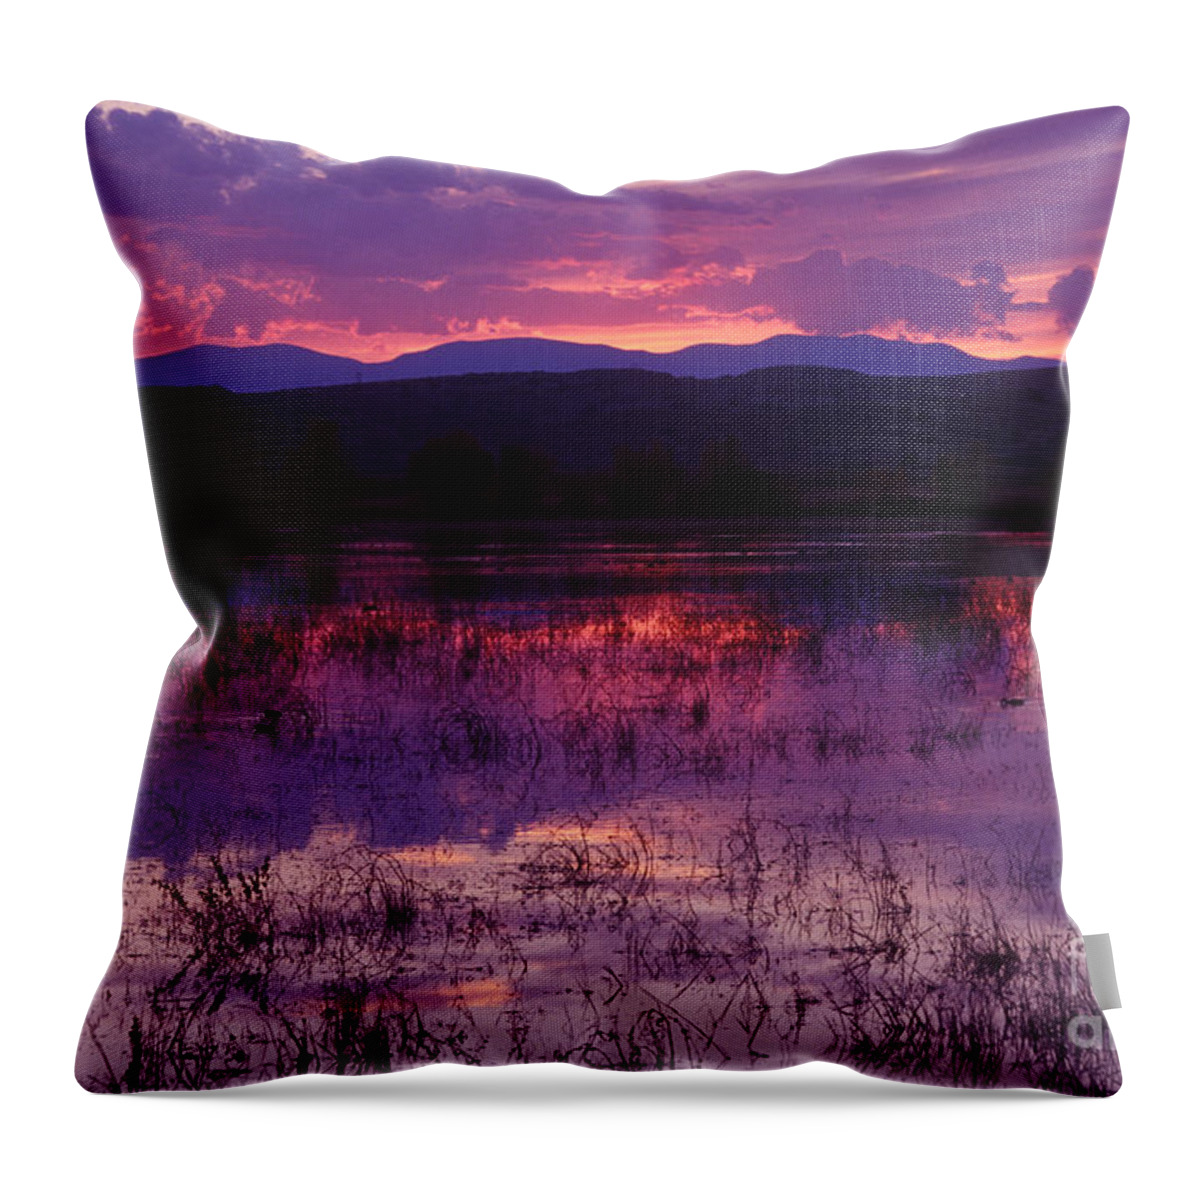 Bosque Throw Pillow featuring the photograph Bosque sunset - purple by Steven Ralser